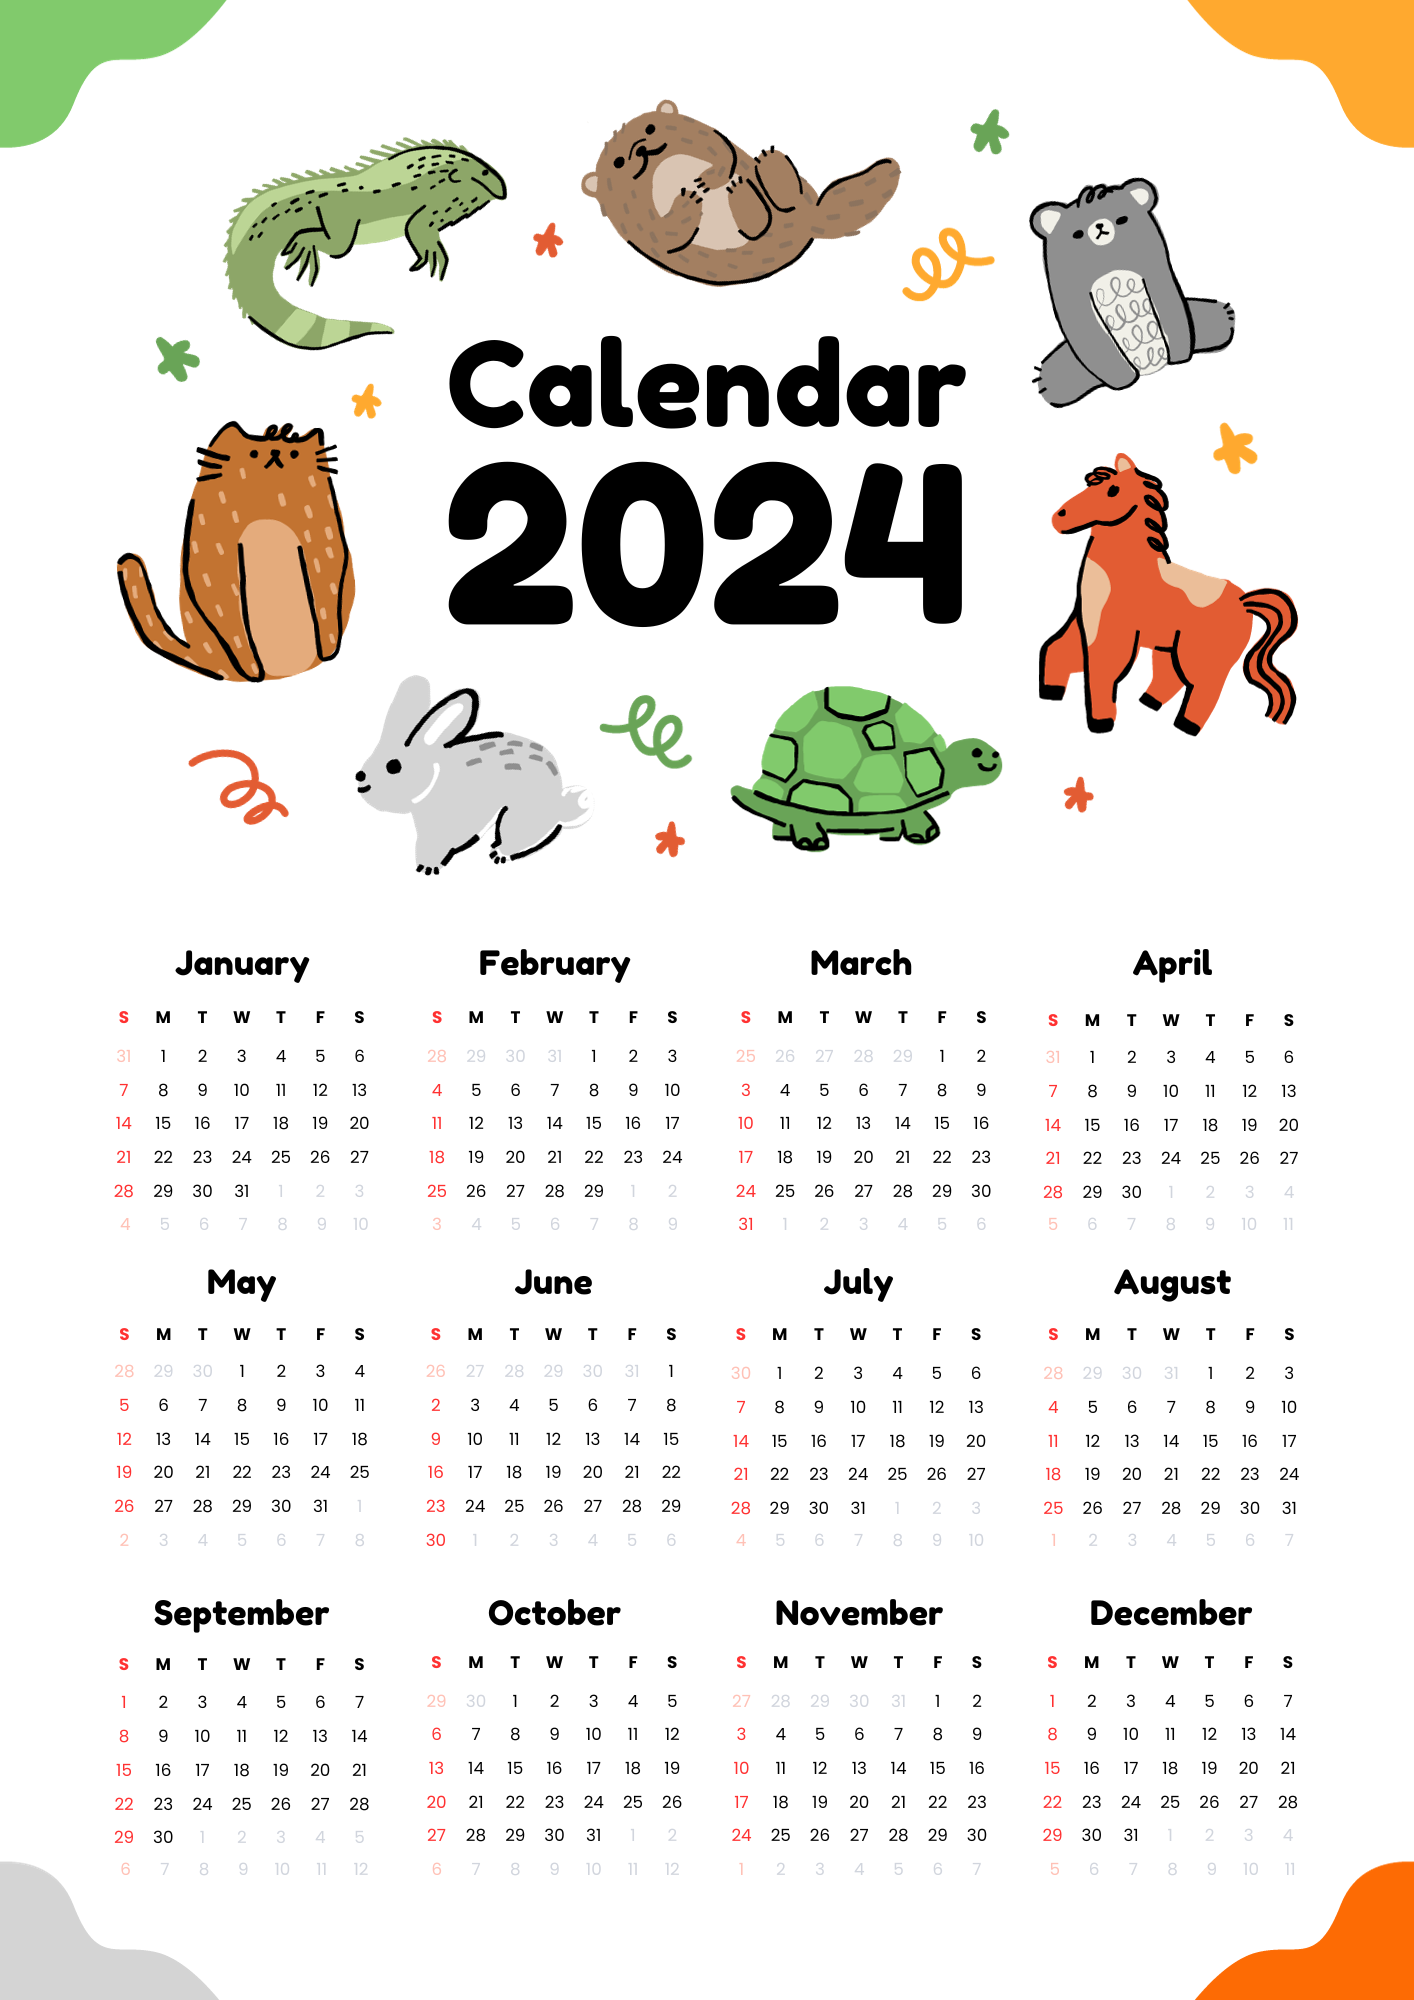 2024 Yearly Calendar